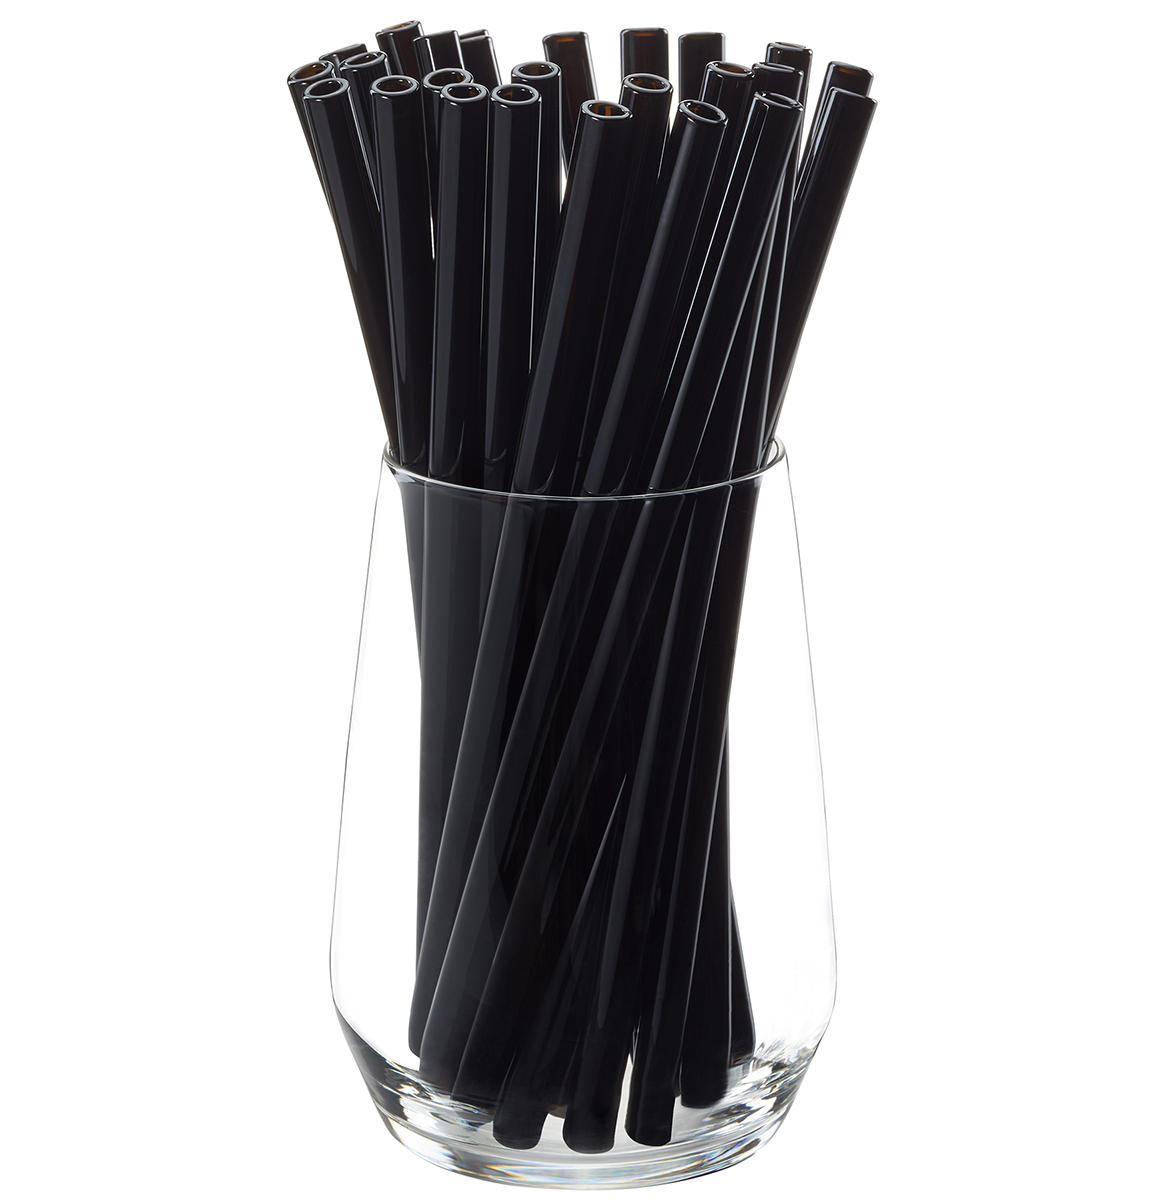 Glass Straw FUTURE, 23 cm, set of 25 black, 2 brushes inclusive